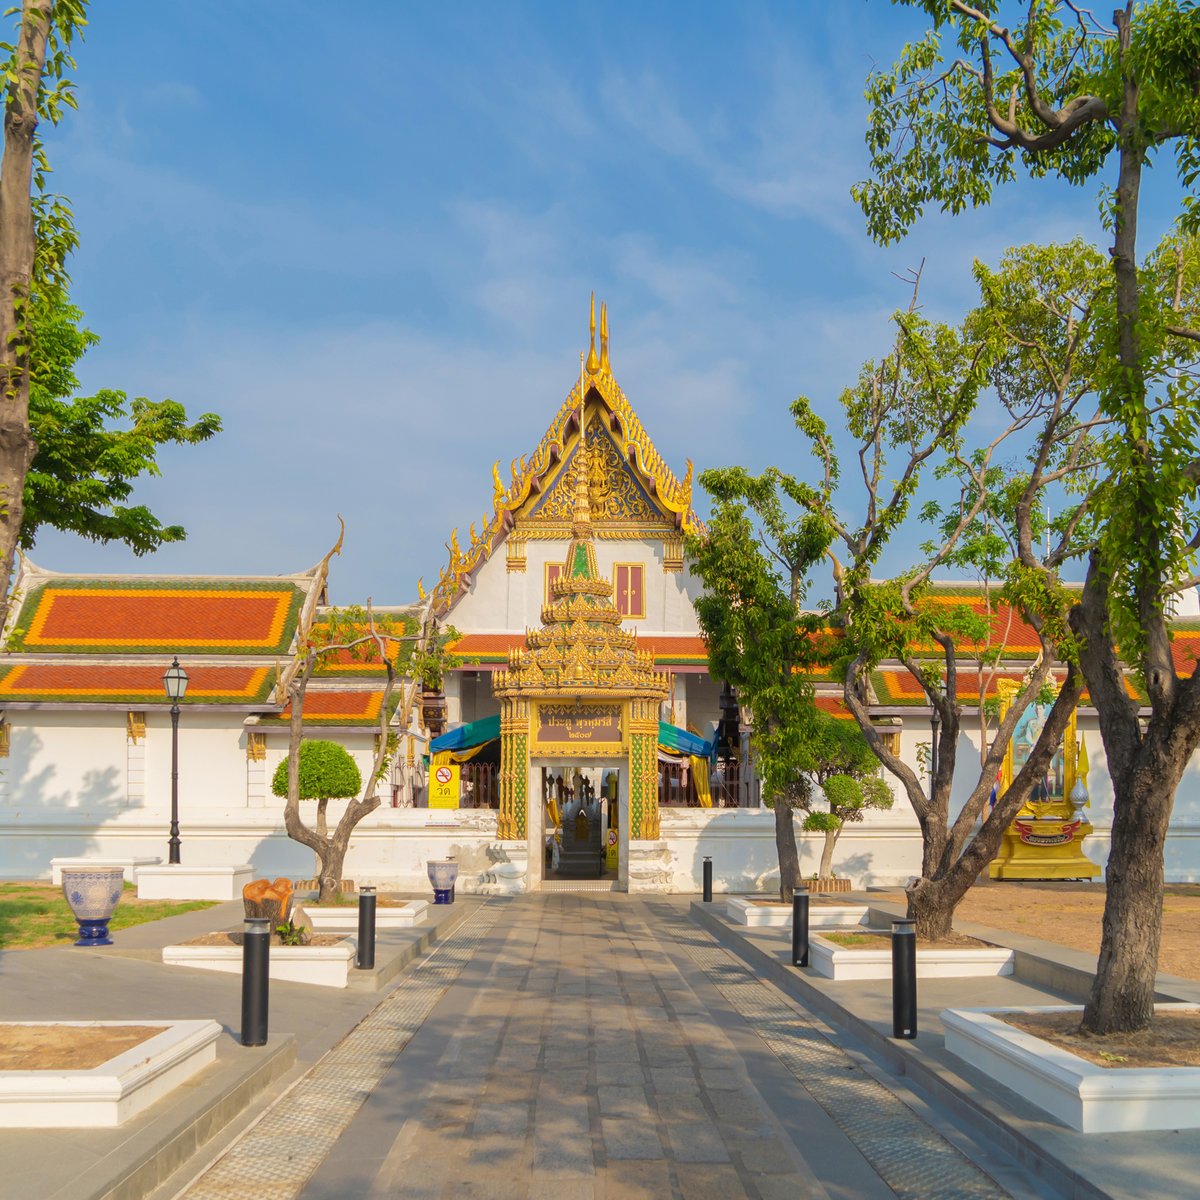 #WatRakhang is a second-class #royalmonastery located in #Thonburi, on the west bank of #ChaoPhrayaRiver.

📷 instagram.com/p/CEYz_07BhI1/

#discoveringbangkok #templeofthebells #bangkoksights #templesofbangkok #ไหว้พระ9วัด #bangkoklandmark #tourismauthorityofthailand #sirirajhospital